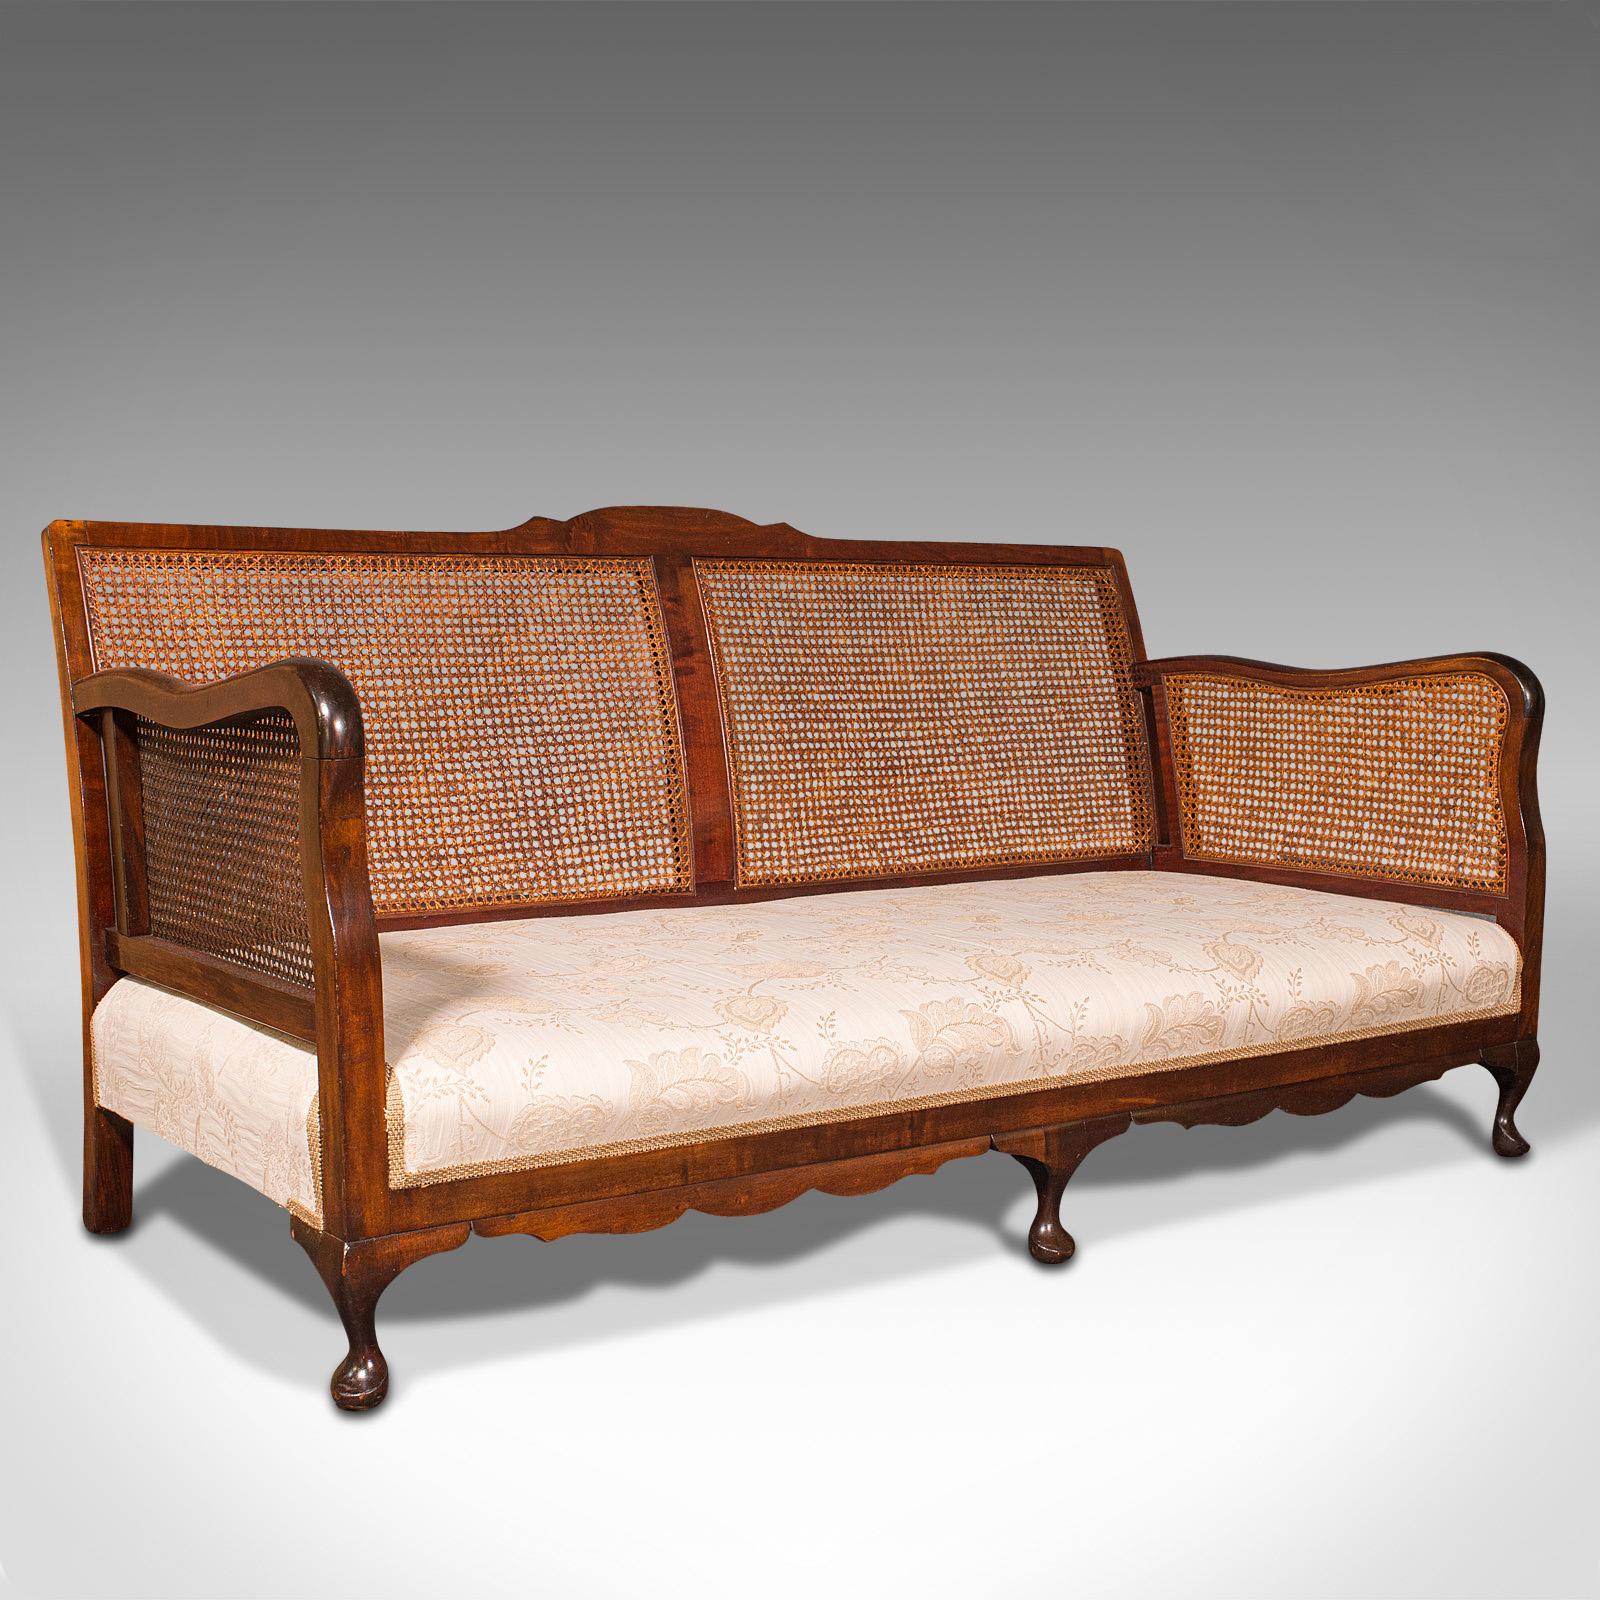 Antique Bergere Sofa, English, Beech, Cane, 2 Seat Settee, Edwardian, Circa 1910 4